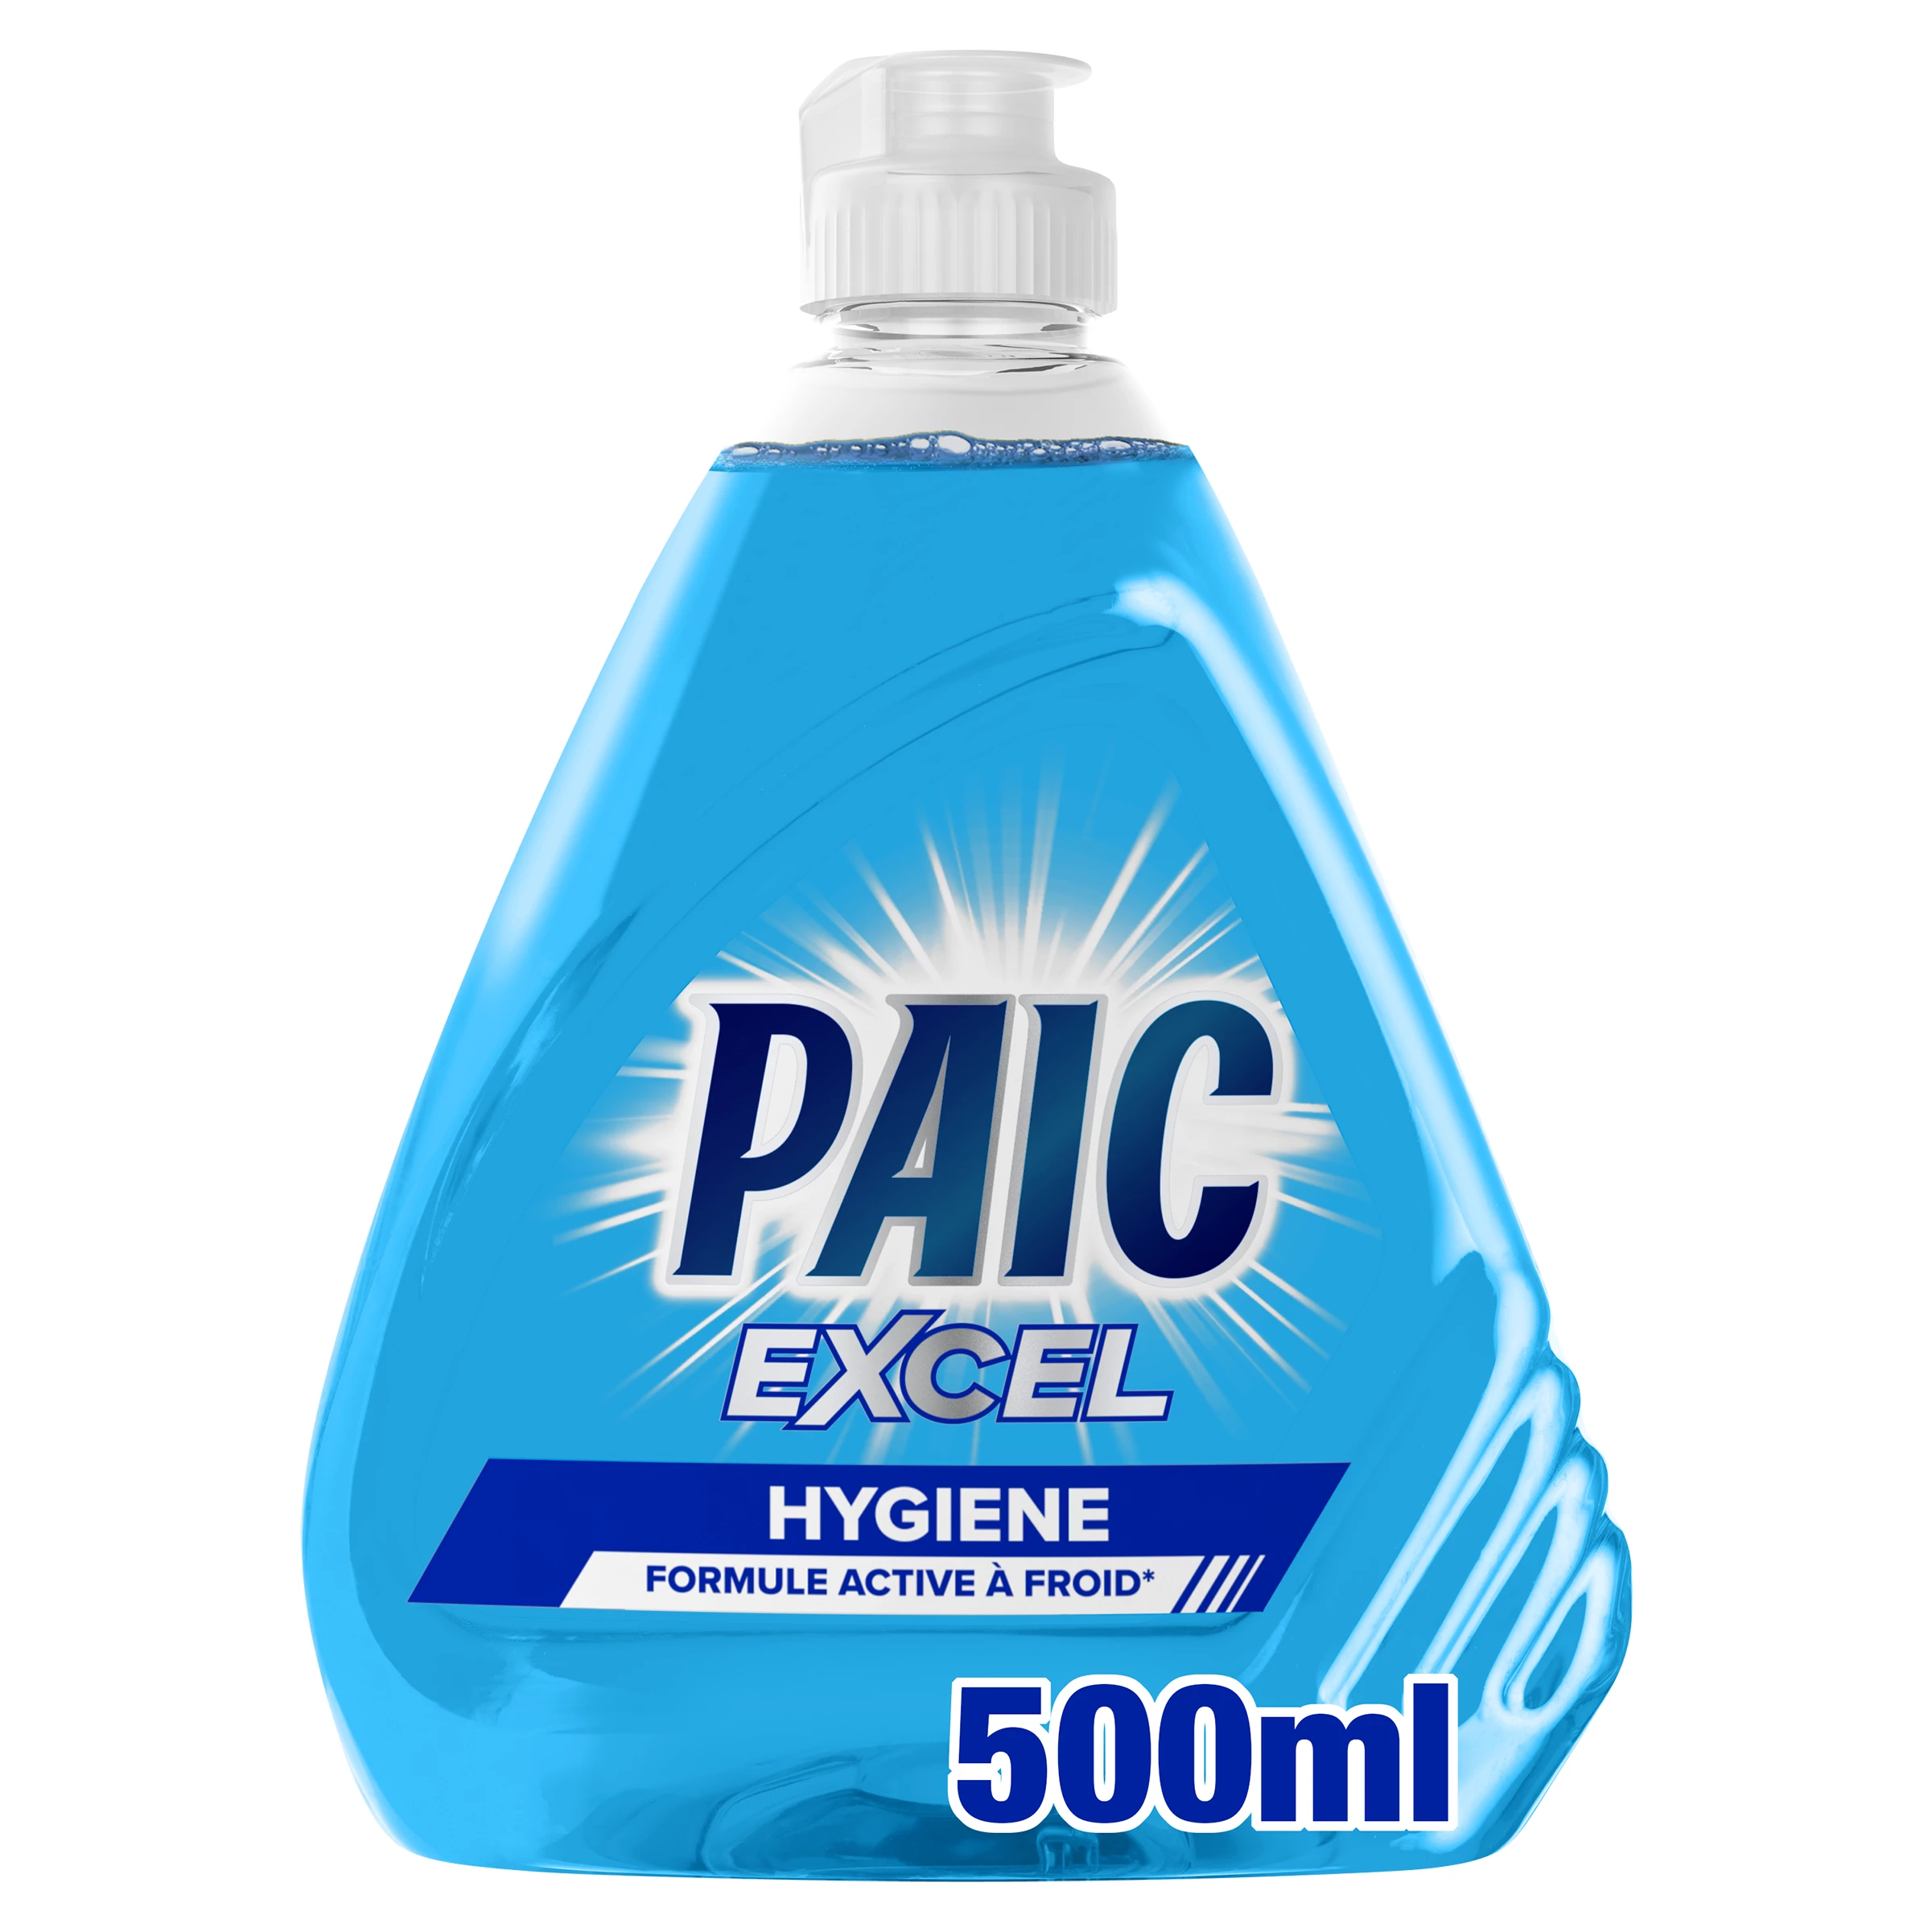 Paic Ultra Braich Hygiene 500m